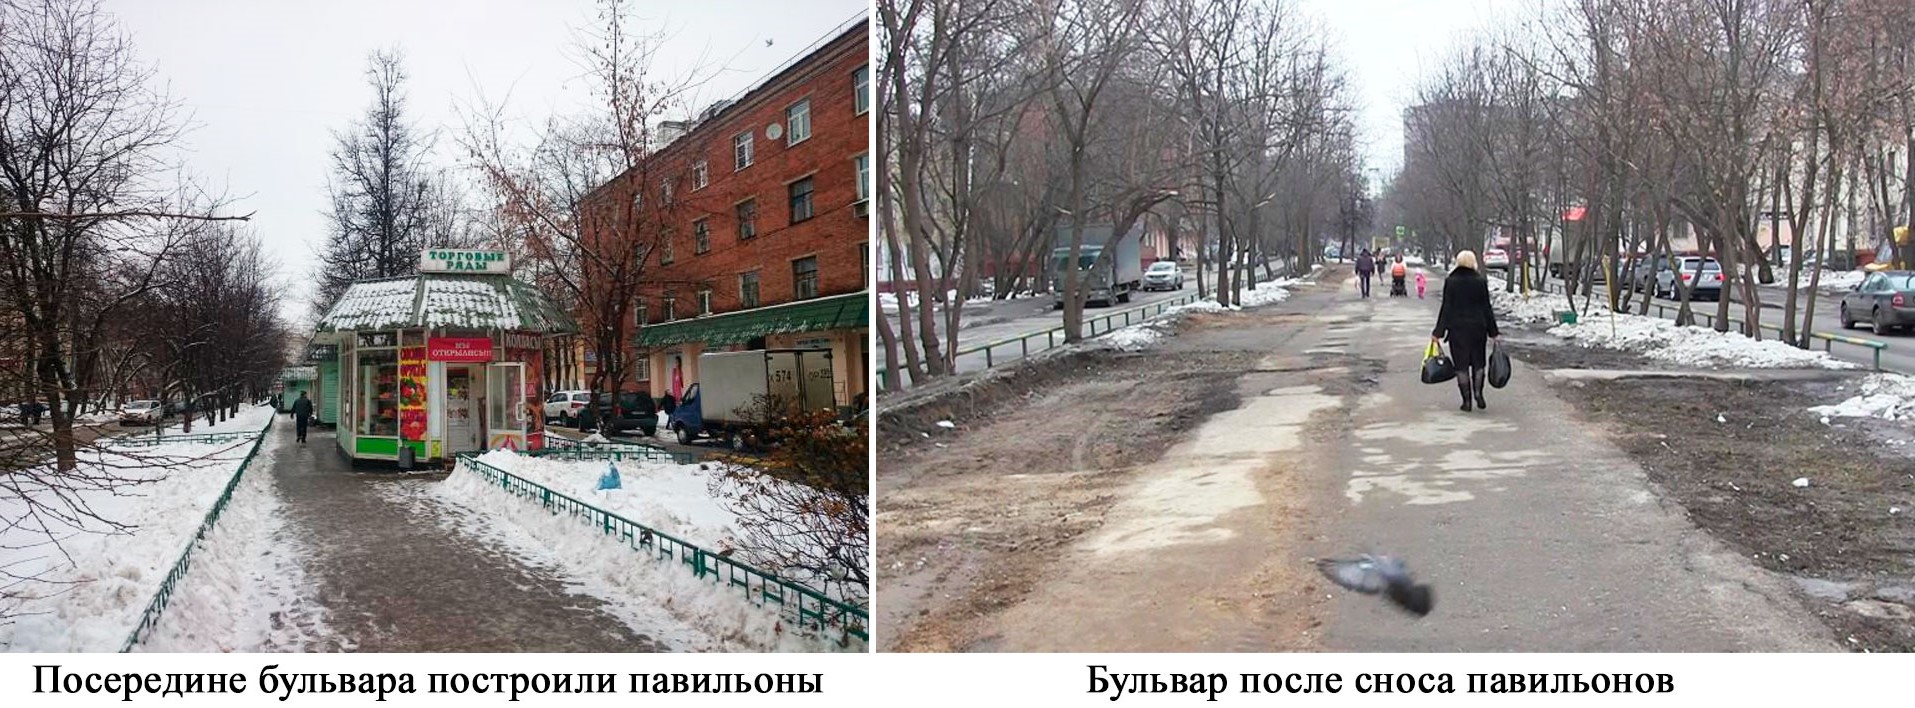 Перемены на бульваре улицы Егора Абакумова 